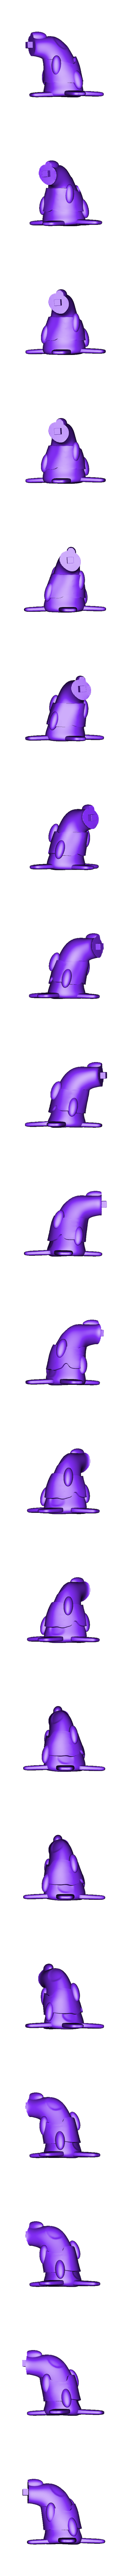 bottom_right_leg.obj Download OBJ file Pokemon - Heatran(with cuts and as a whole) • 3D print design, ErickFontoura3D